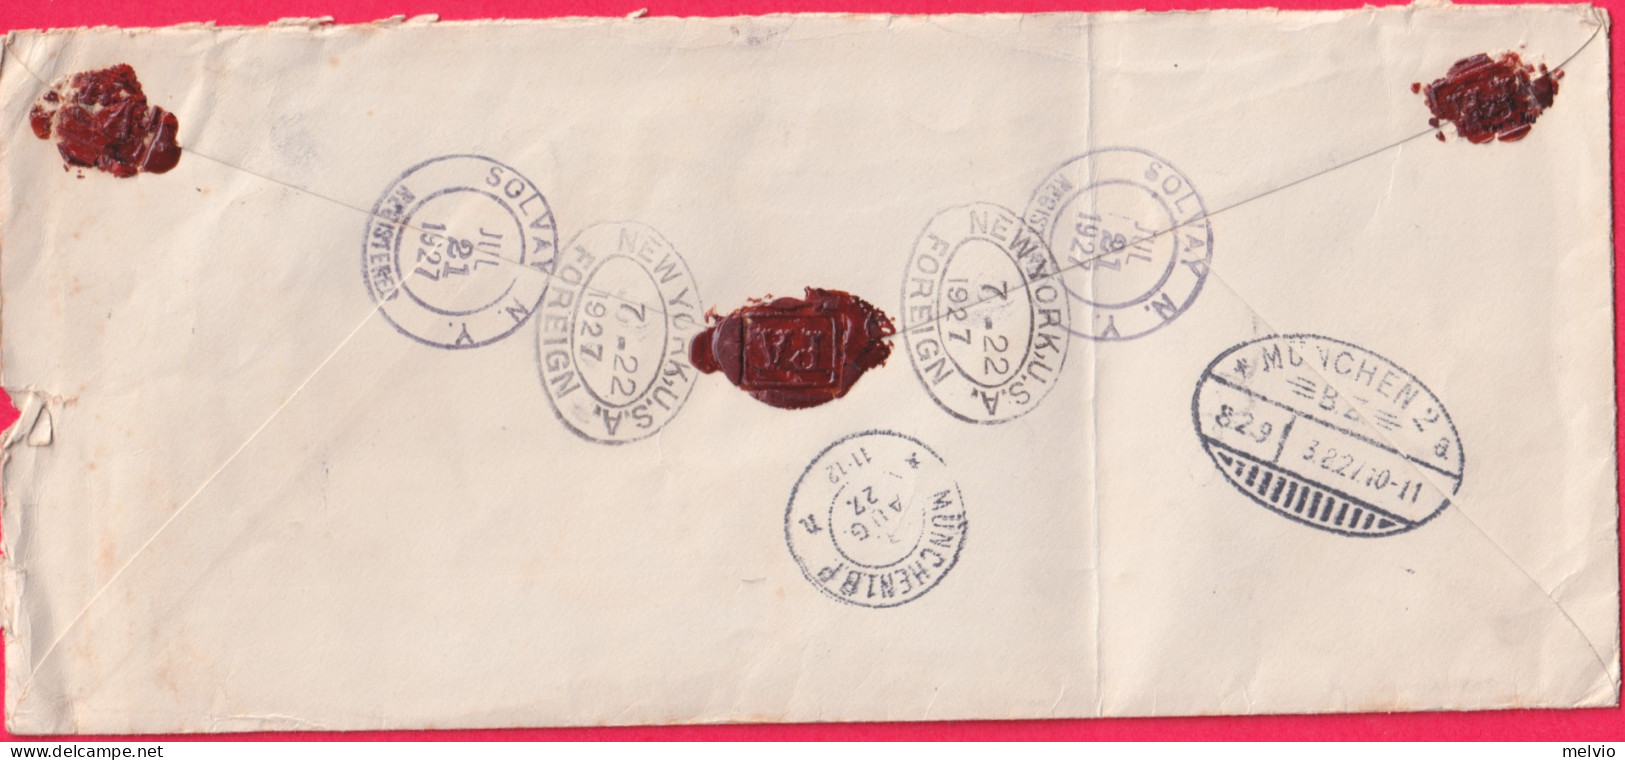 1927-U.S.A. Raccomandata Diretta In Germania - Postal History